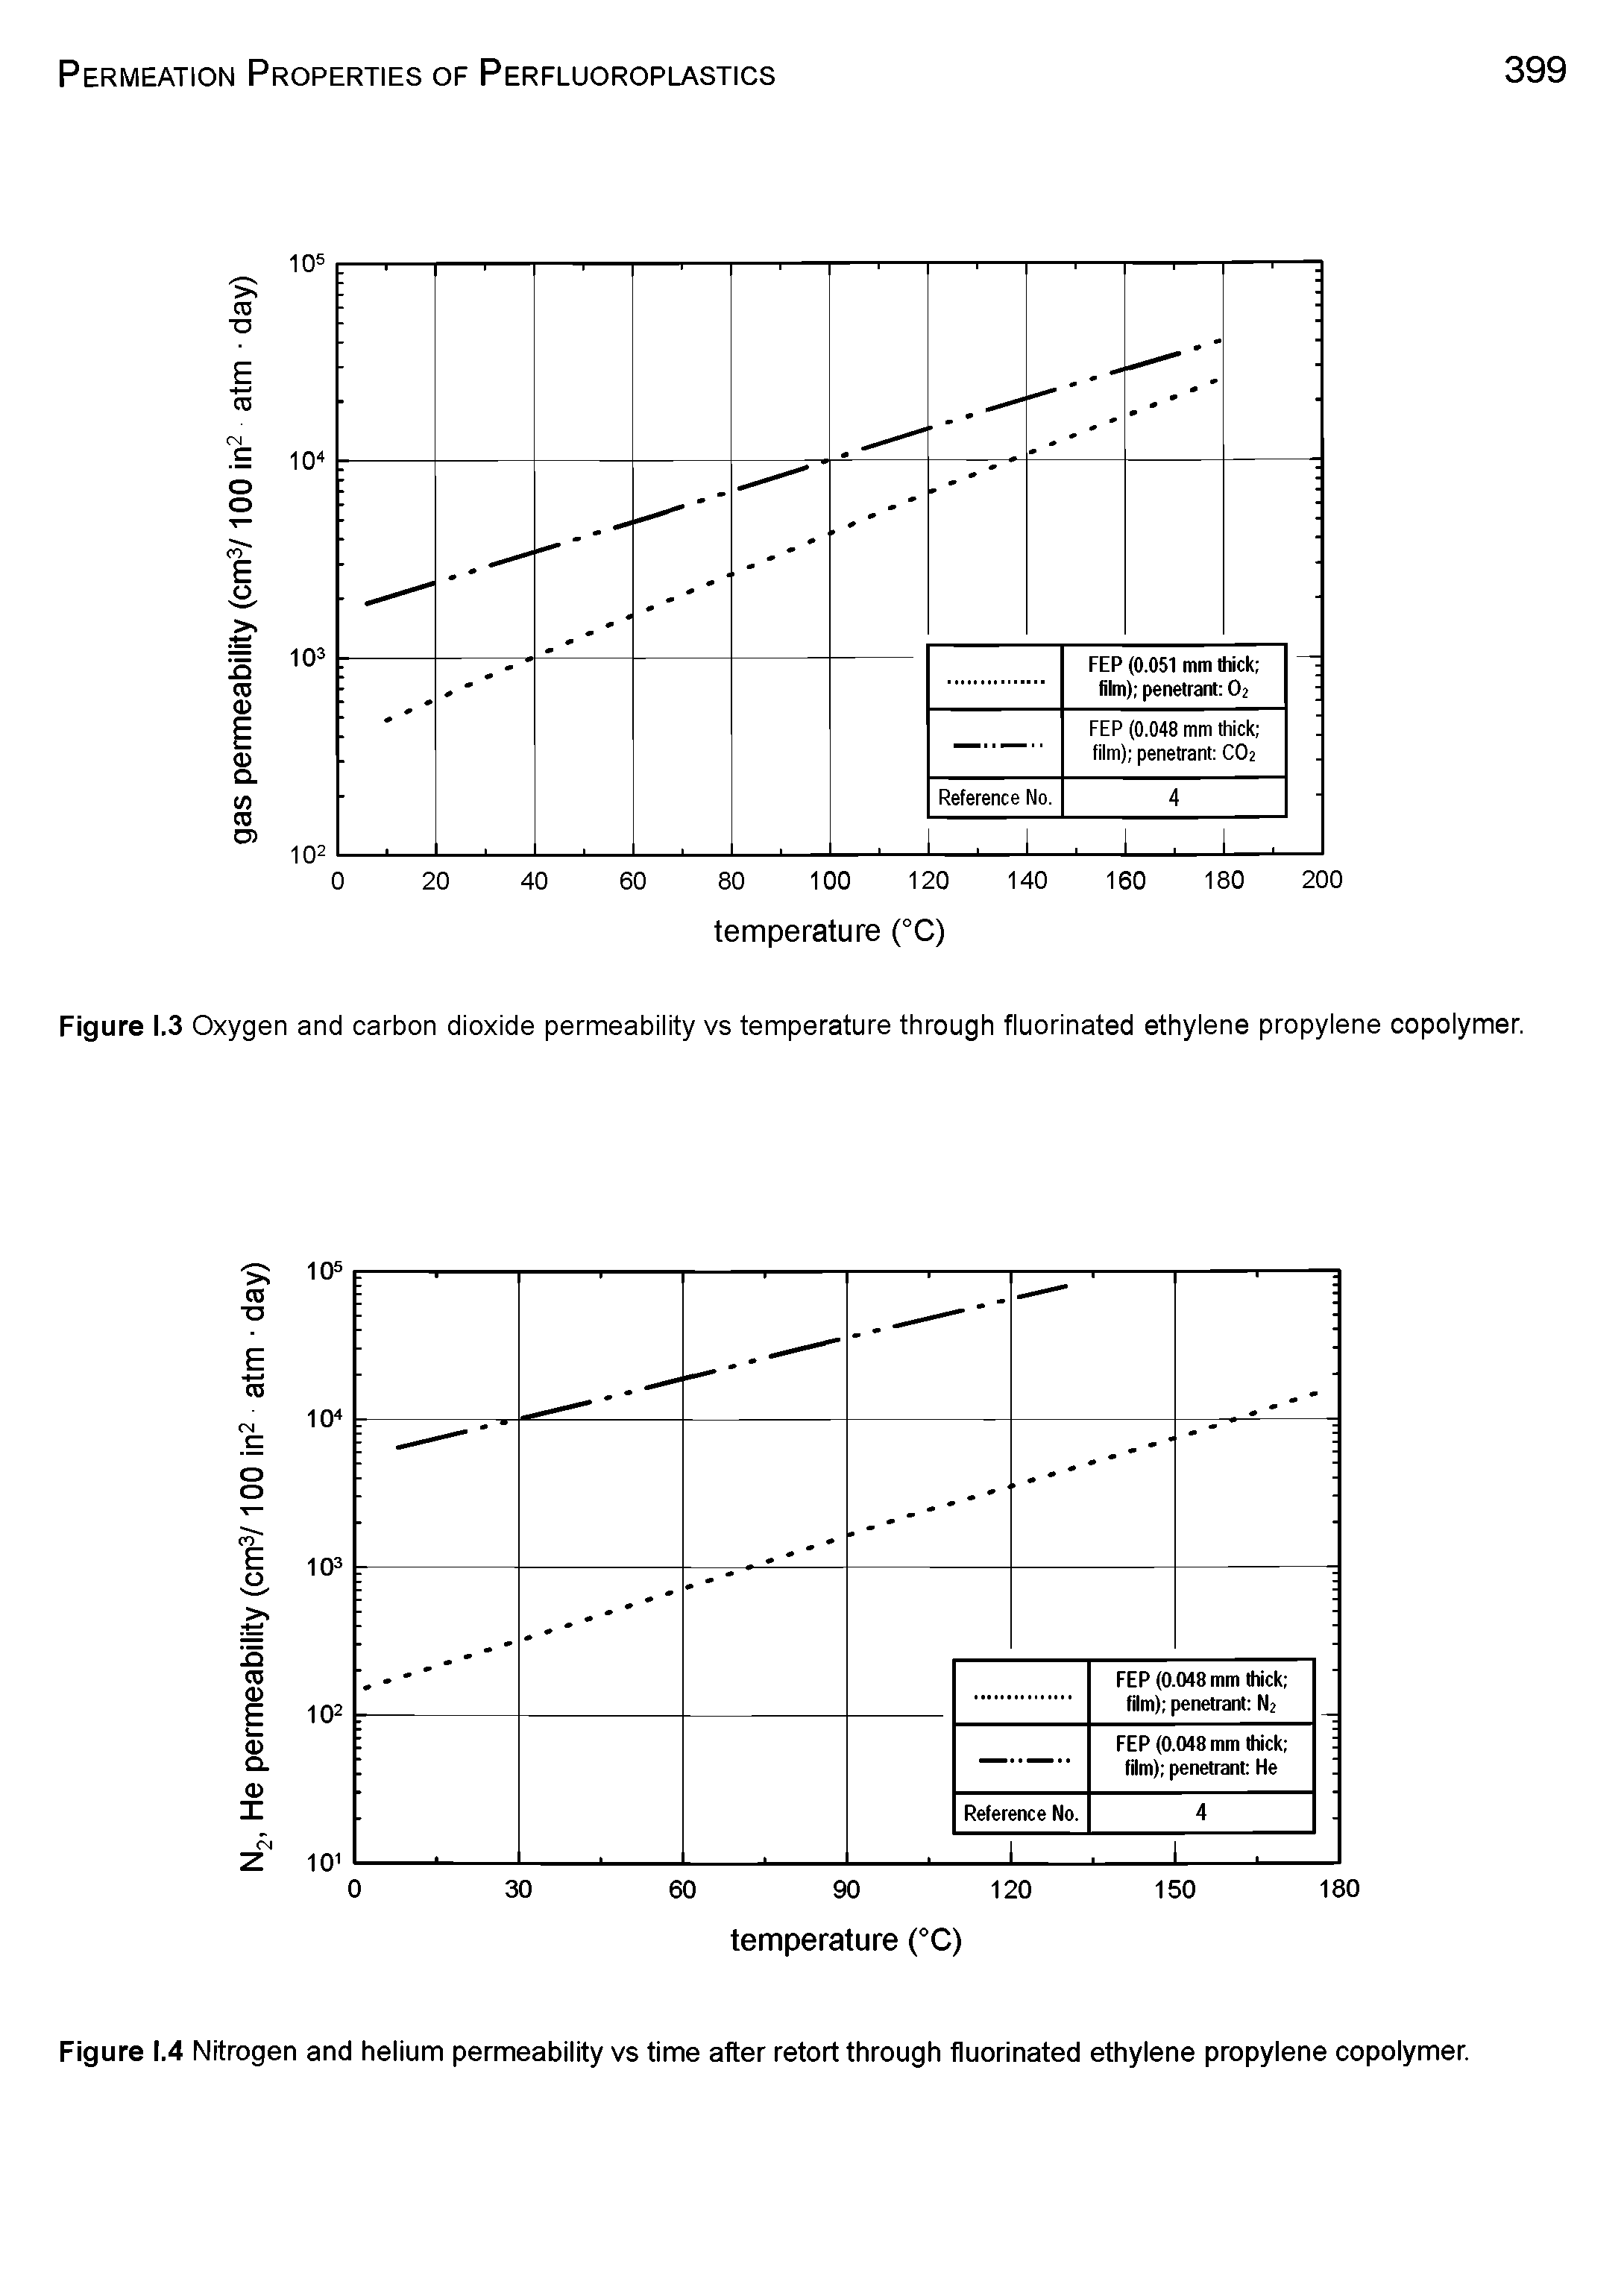 Figure 1.3 Oxygen and carbon dioxide permeability vs temperature through fluorinated ethylene propylene copolymer.